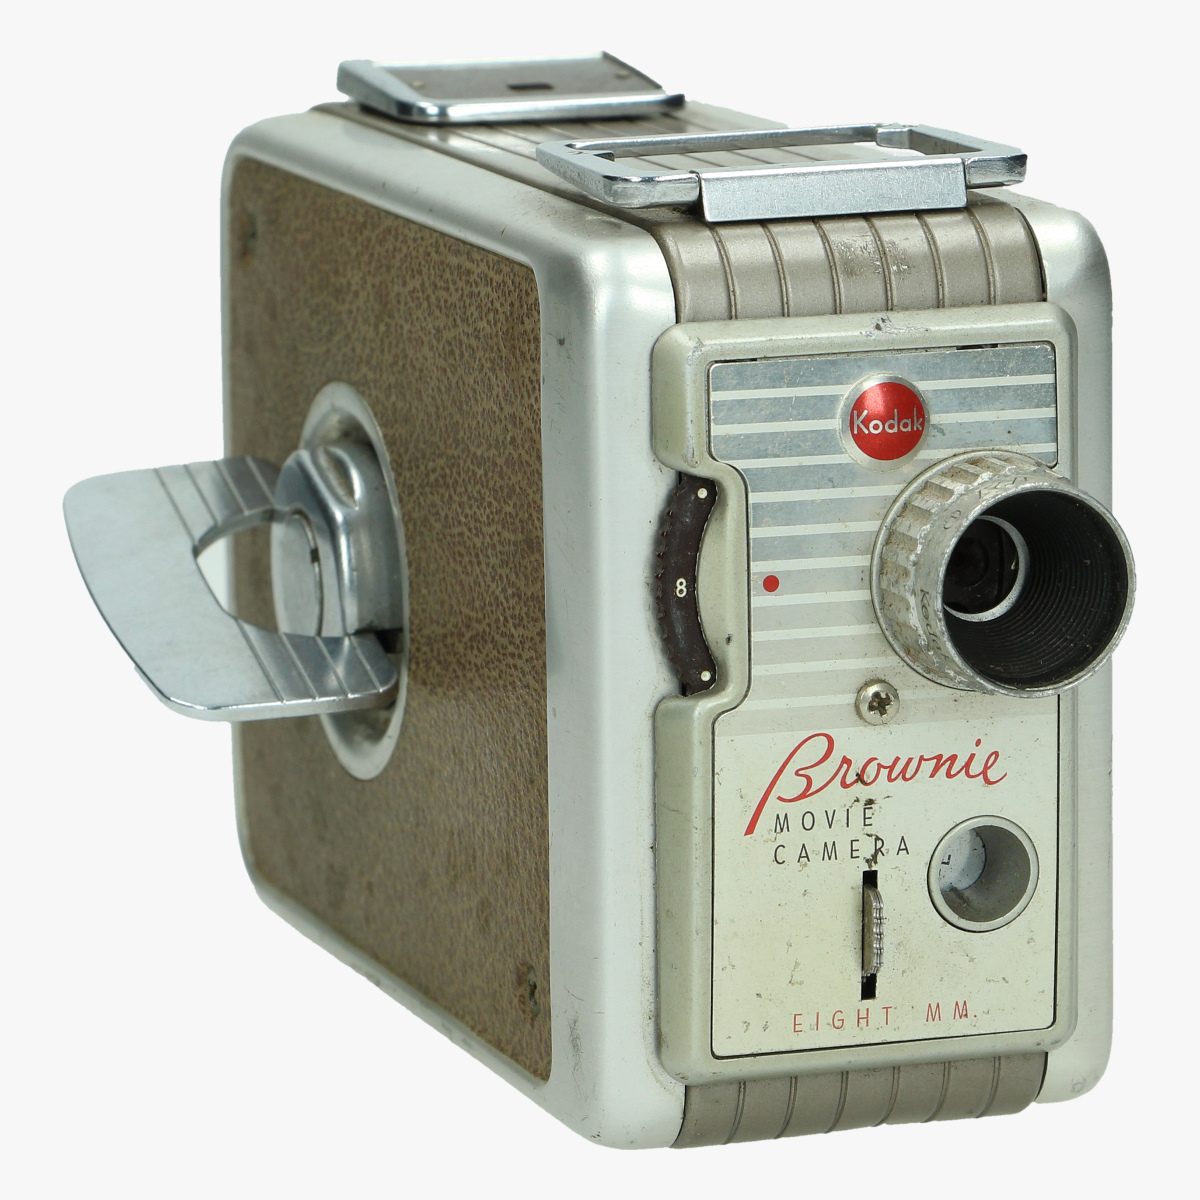 Afbeeldingen van videocamera brownie movie camera eight mm